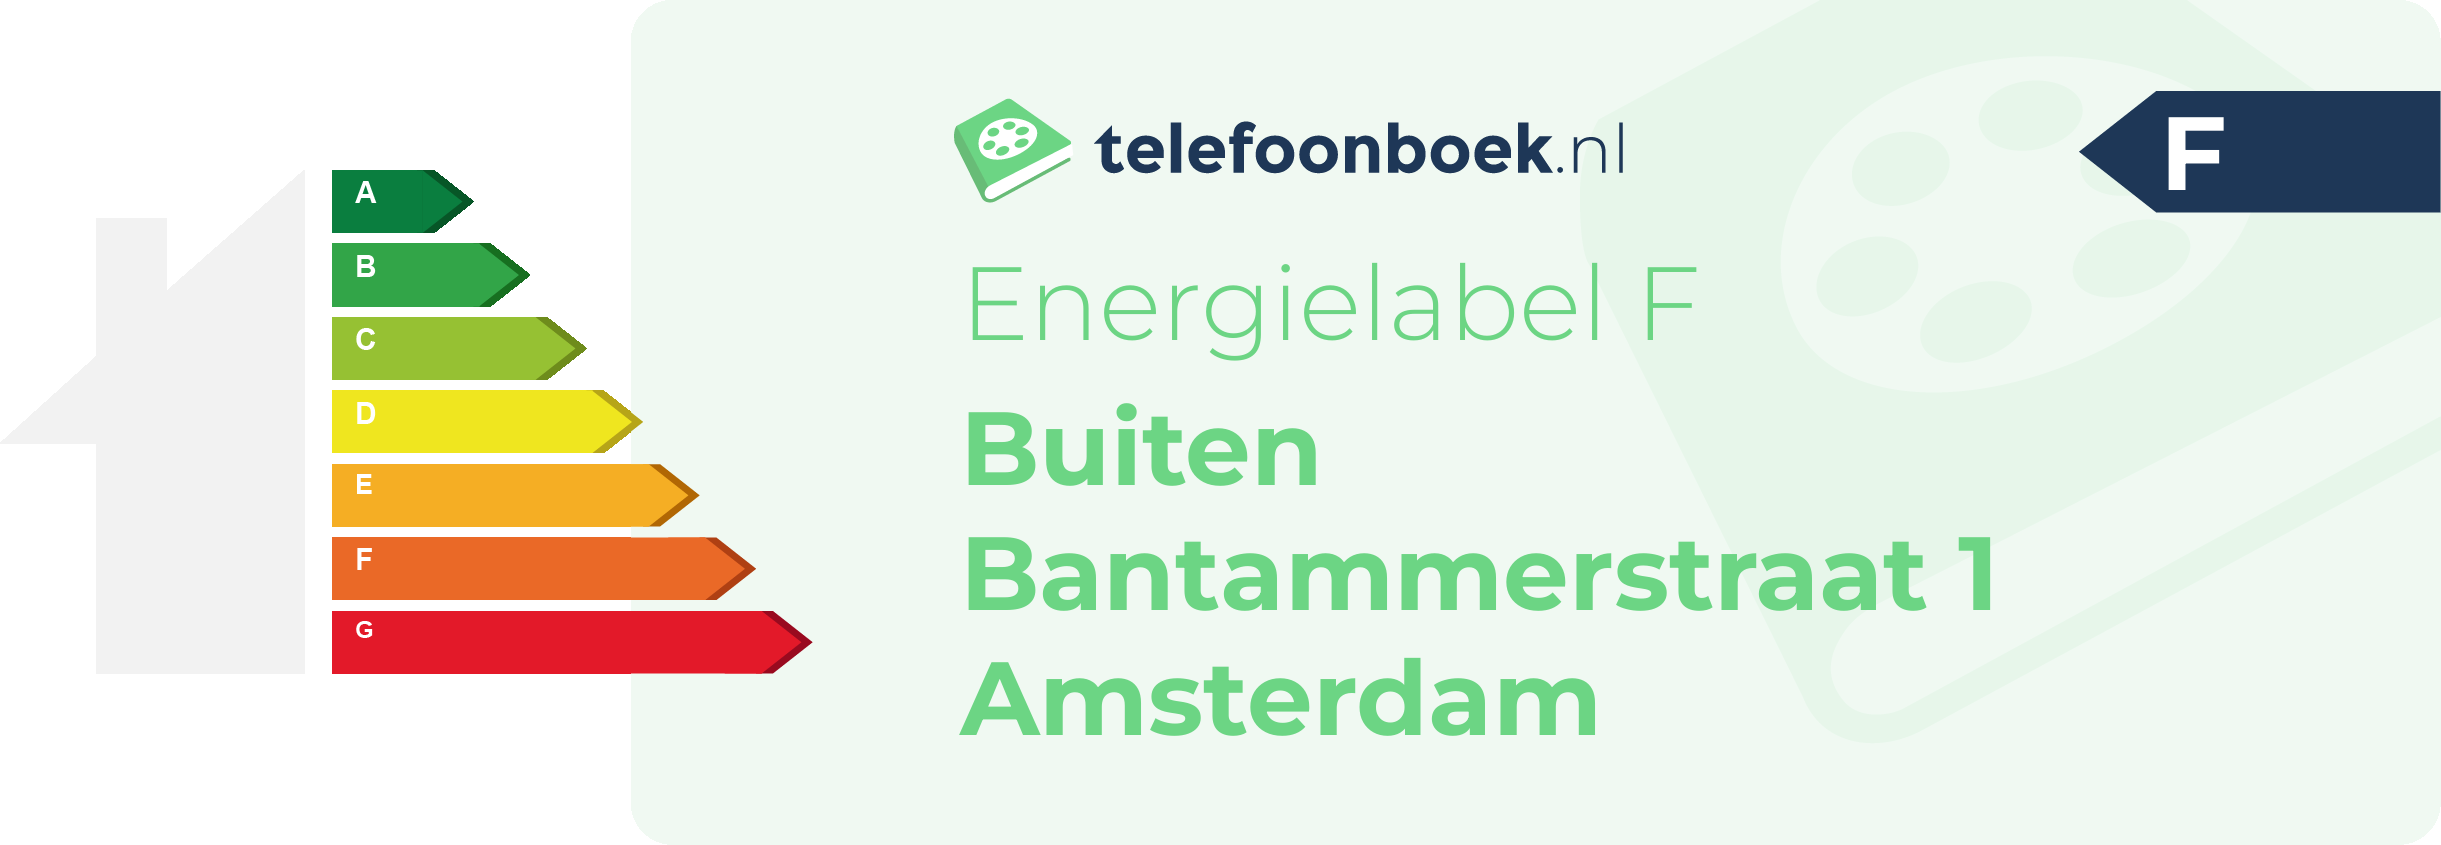 Energielabel Buiten Bantammerstraat 1 Amsterdam